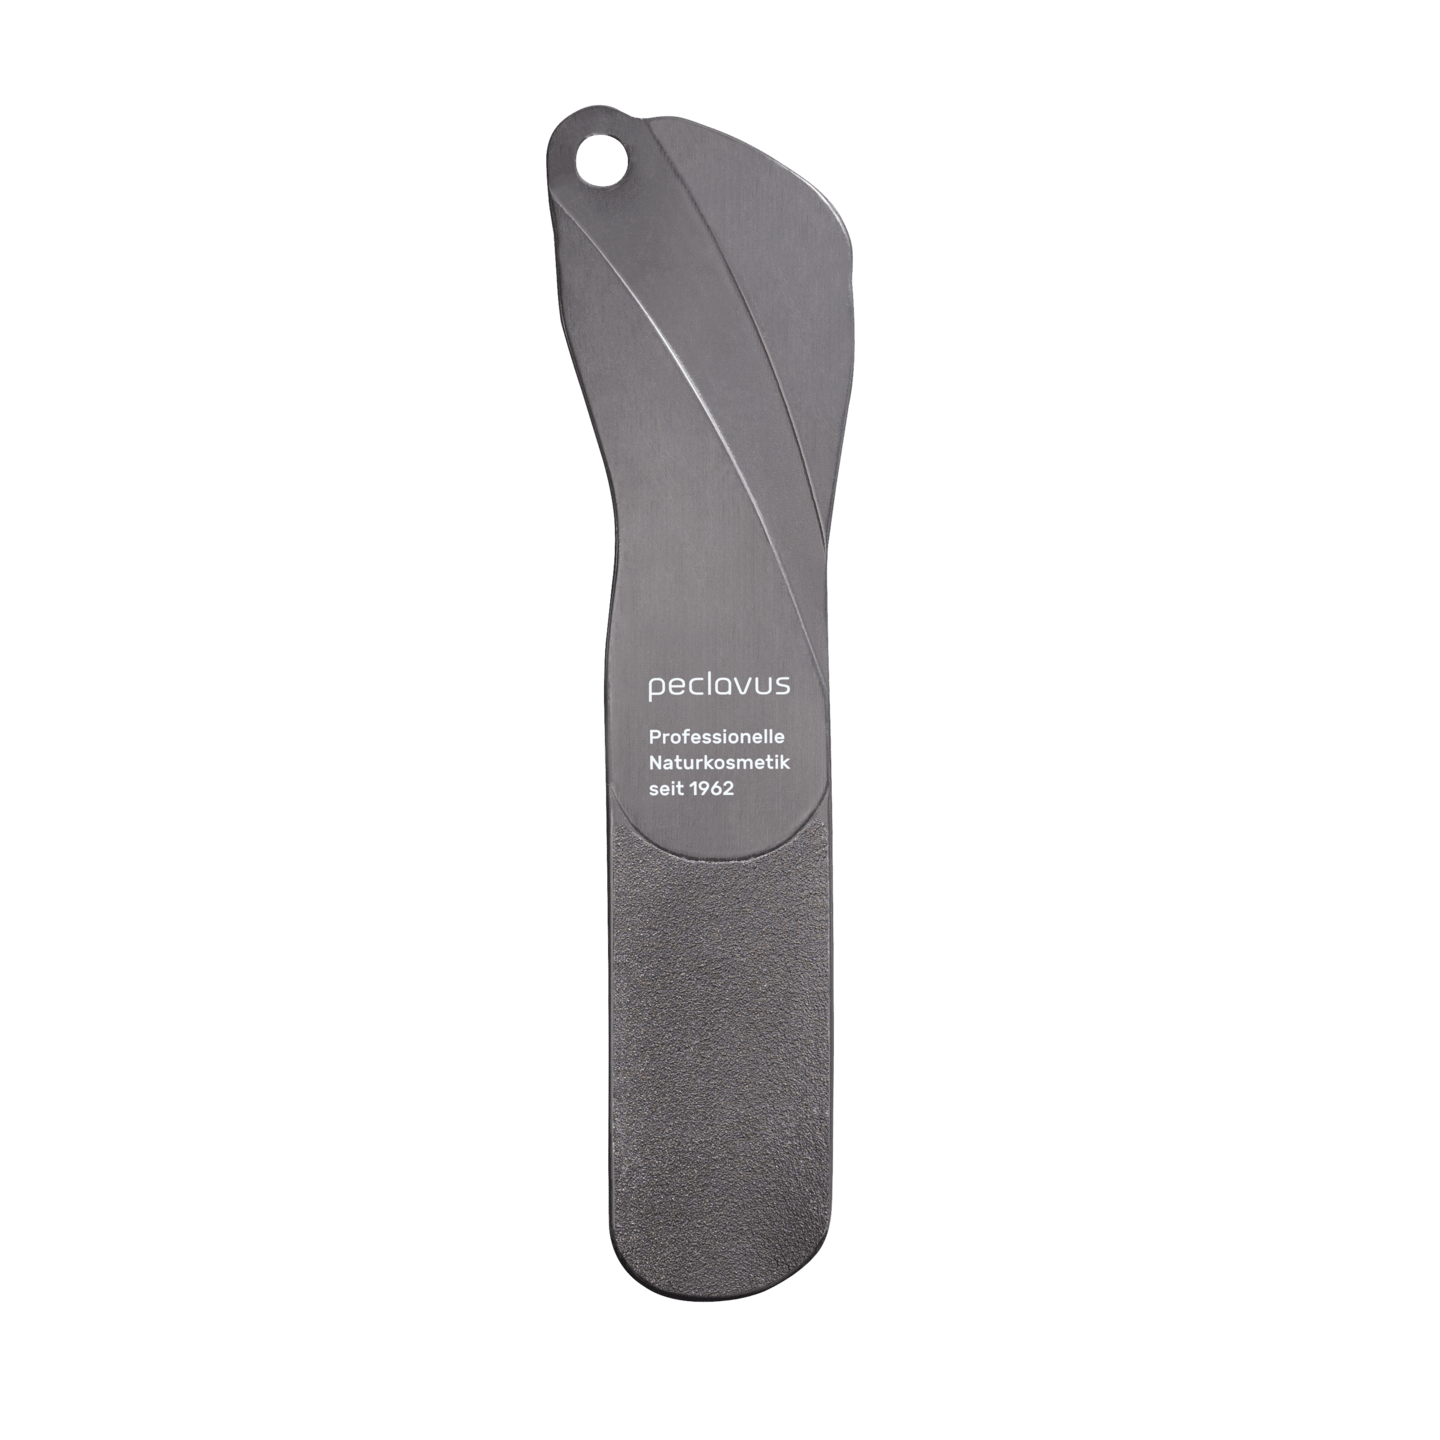 peclavus - Fußfeile, Kunststoff, 20 cm in schwarz